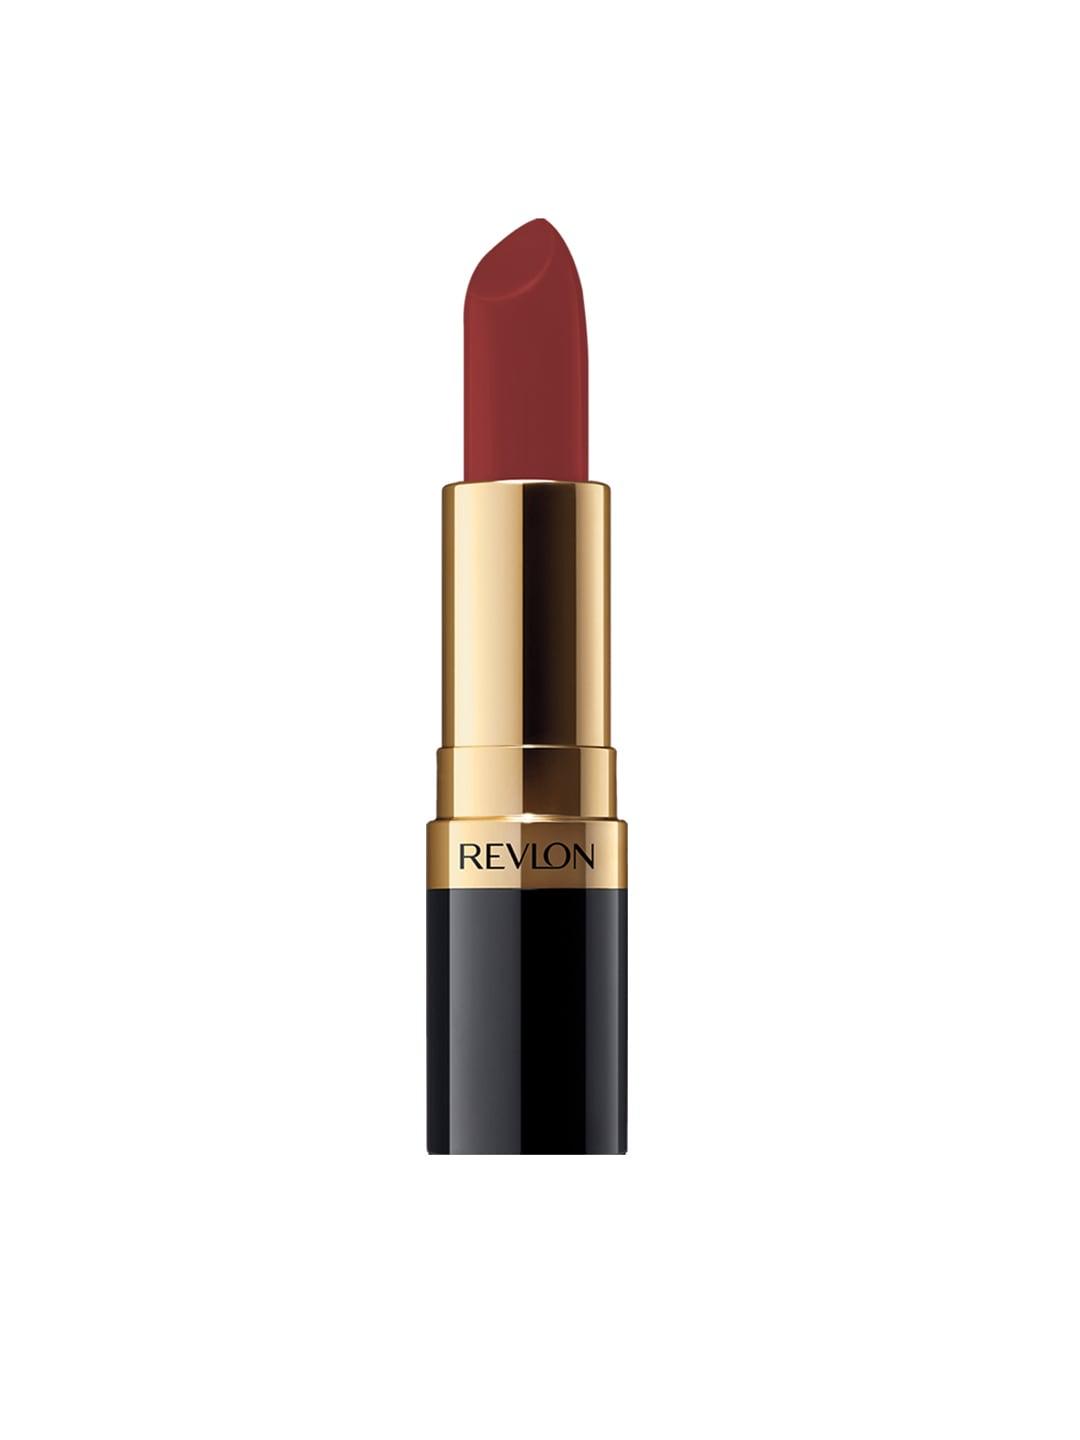 Revlon Super Lustrous Lipstick - Toast Of New York